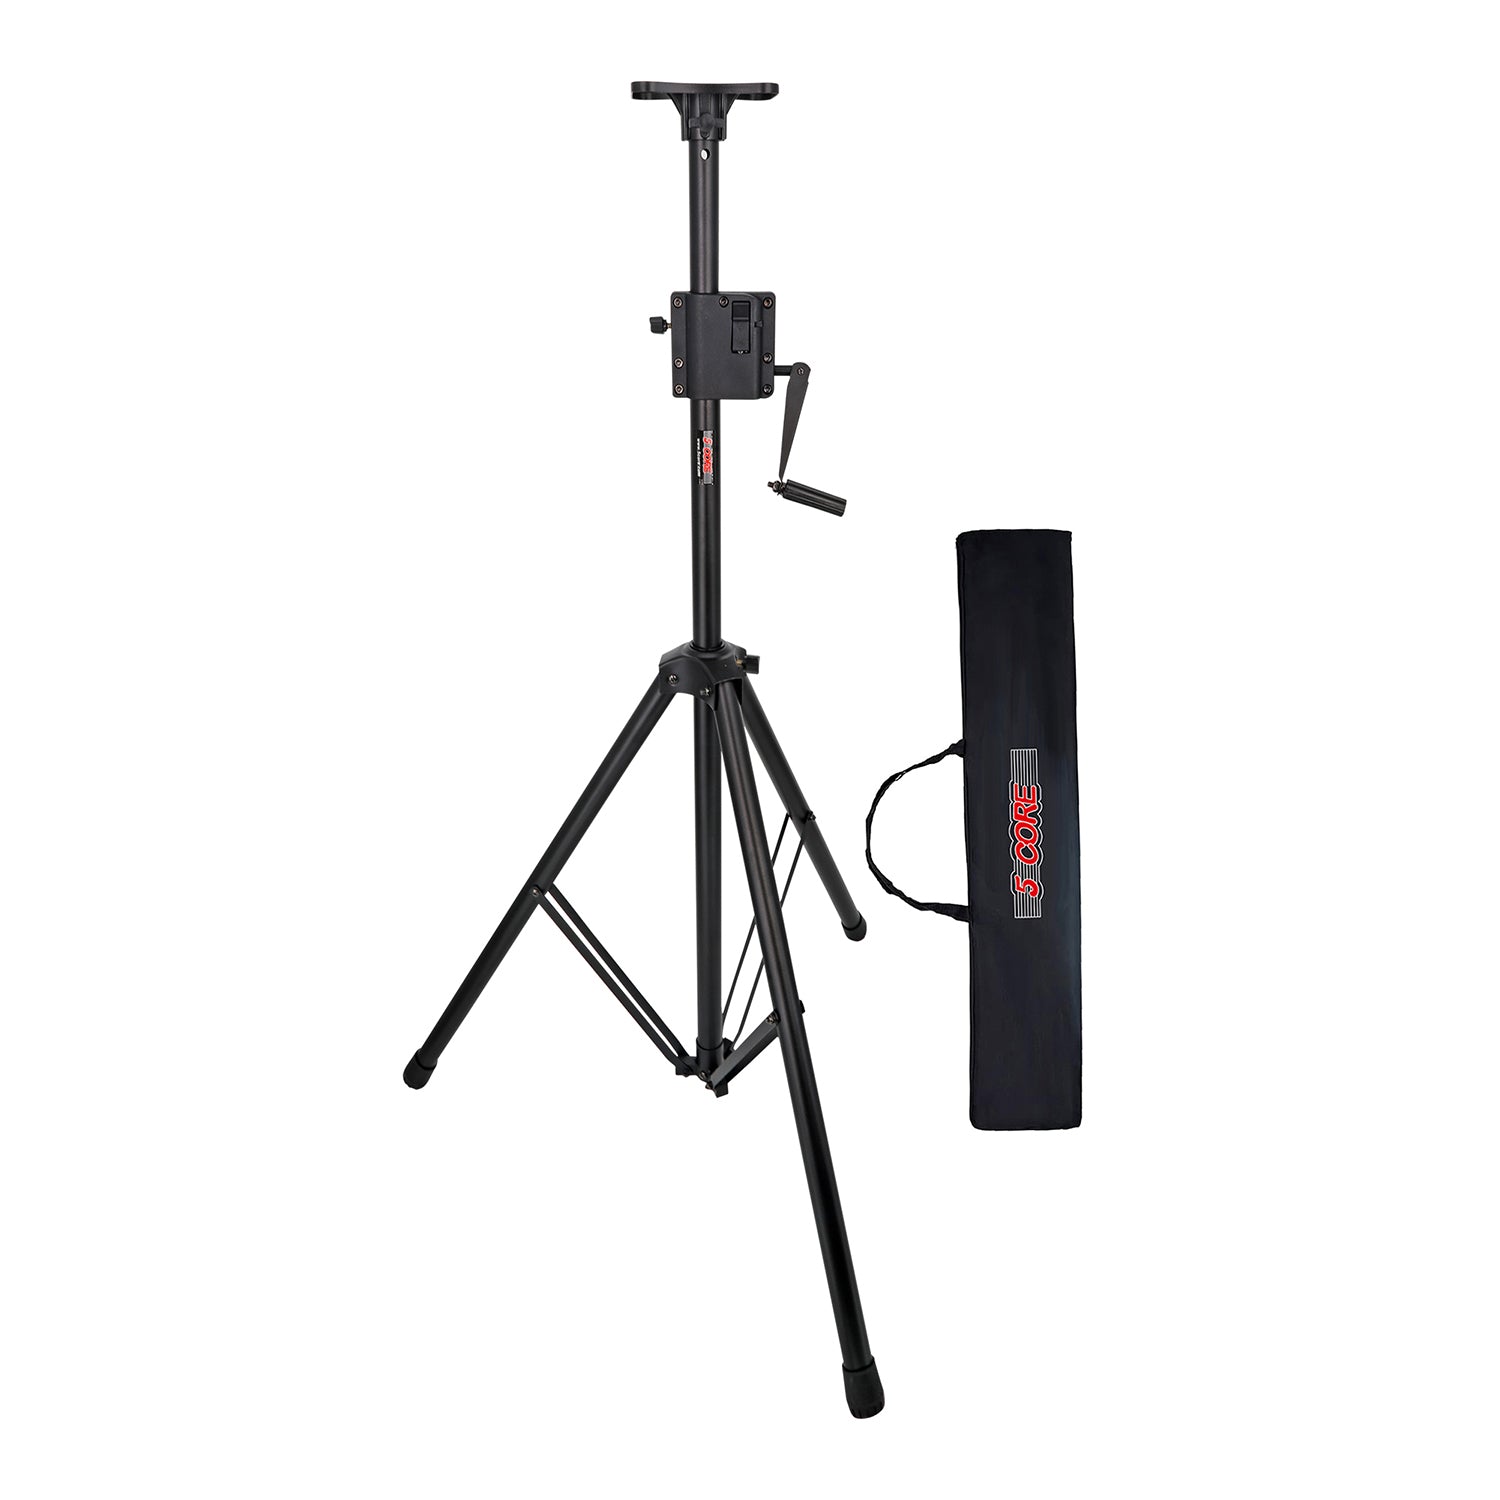 5 Core Speaker Stand Tripod Tall Adjustable 35mm Heavy Duty DJ Studio Monitor Stands Pole Mount 1 2 Pc